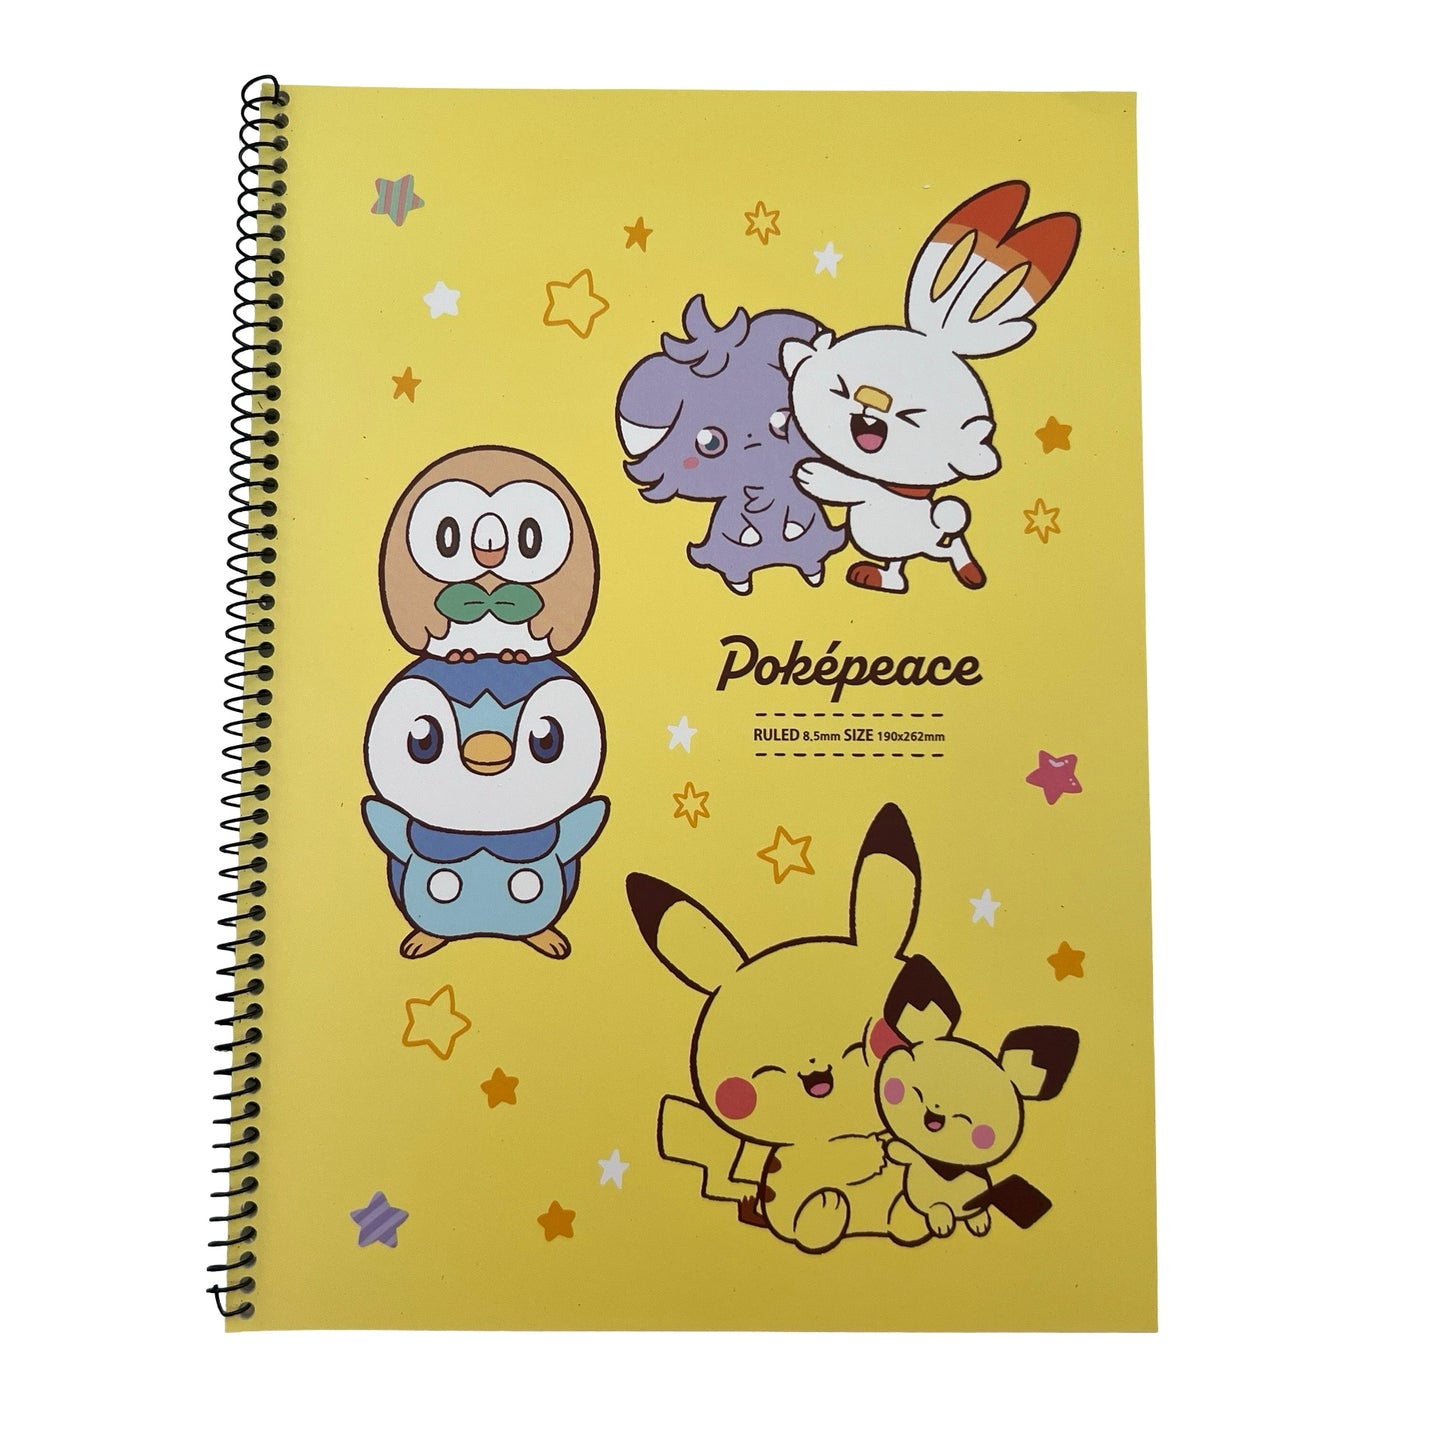 Pokémon Peaceful Place Spiral Notebook